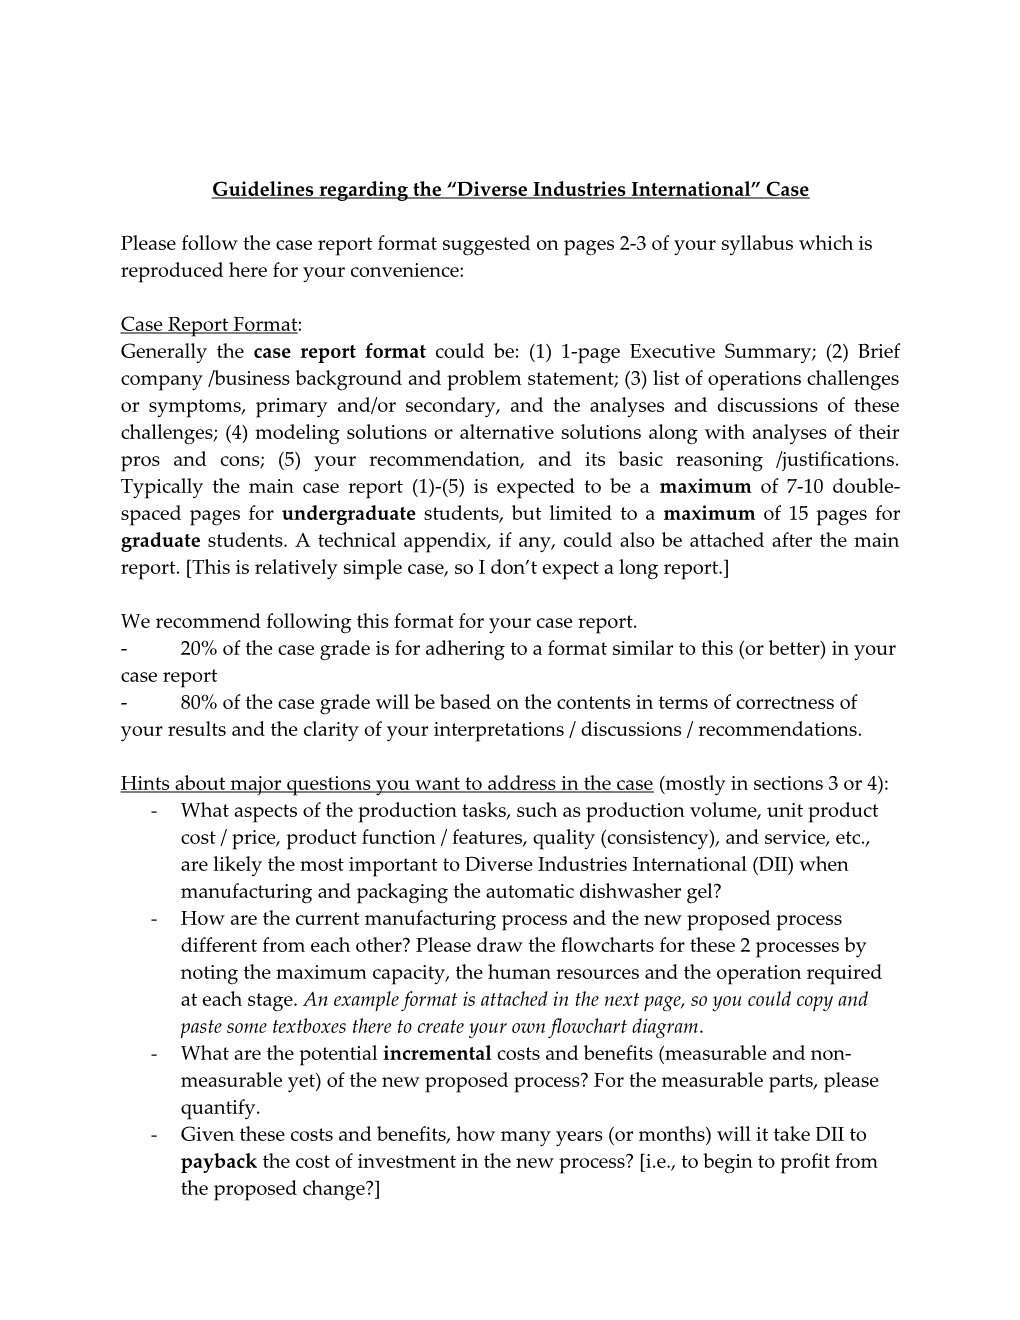 Guidelines Regarding the Diverse Industries International Case